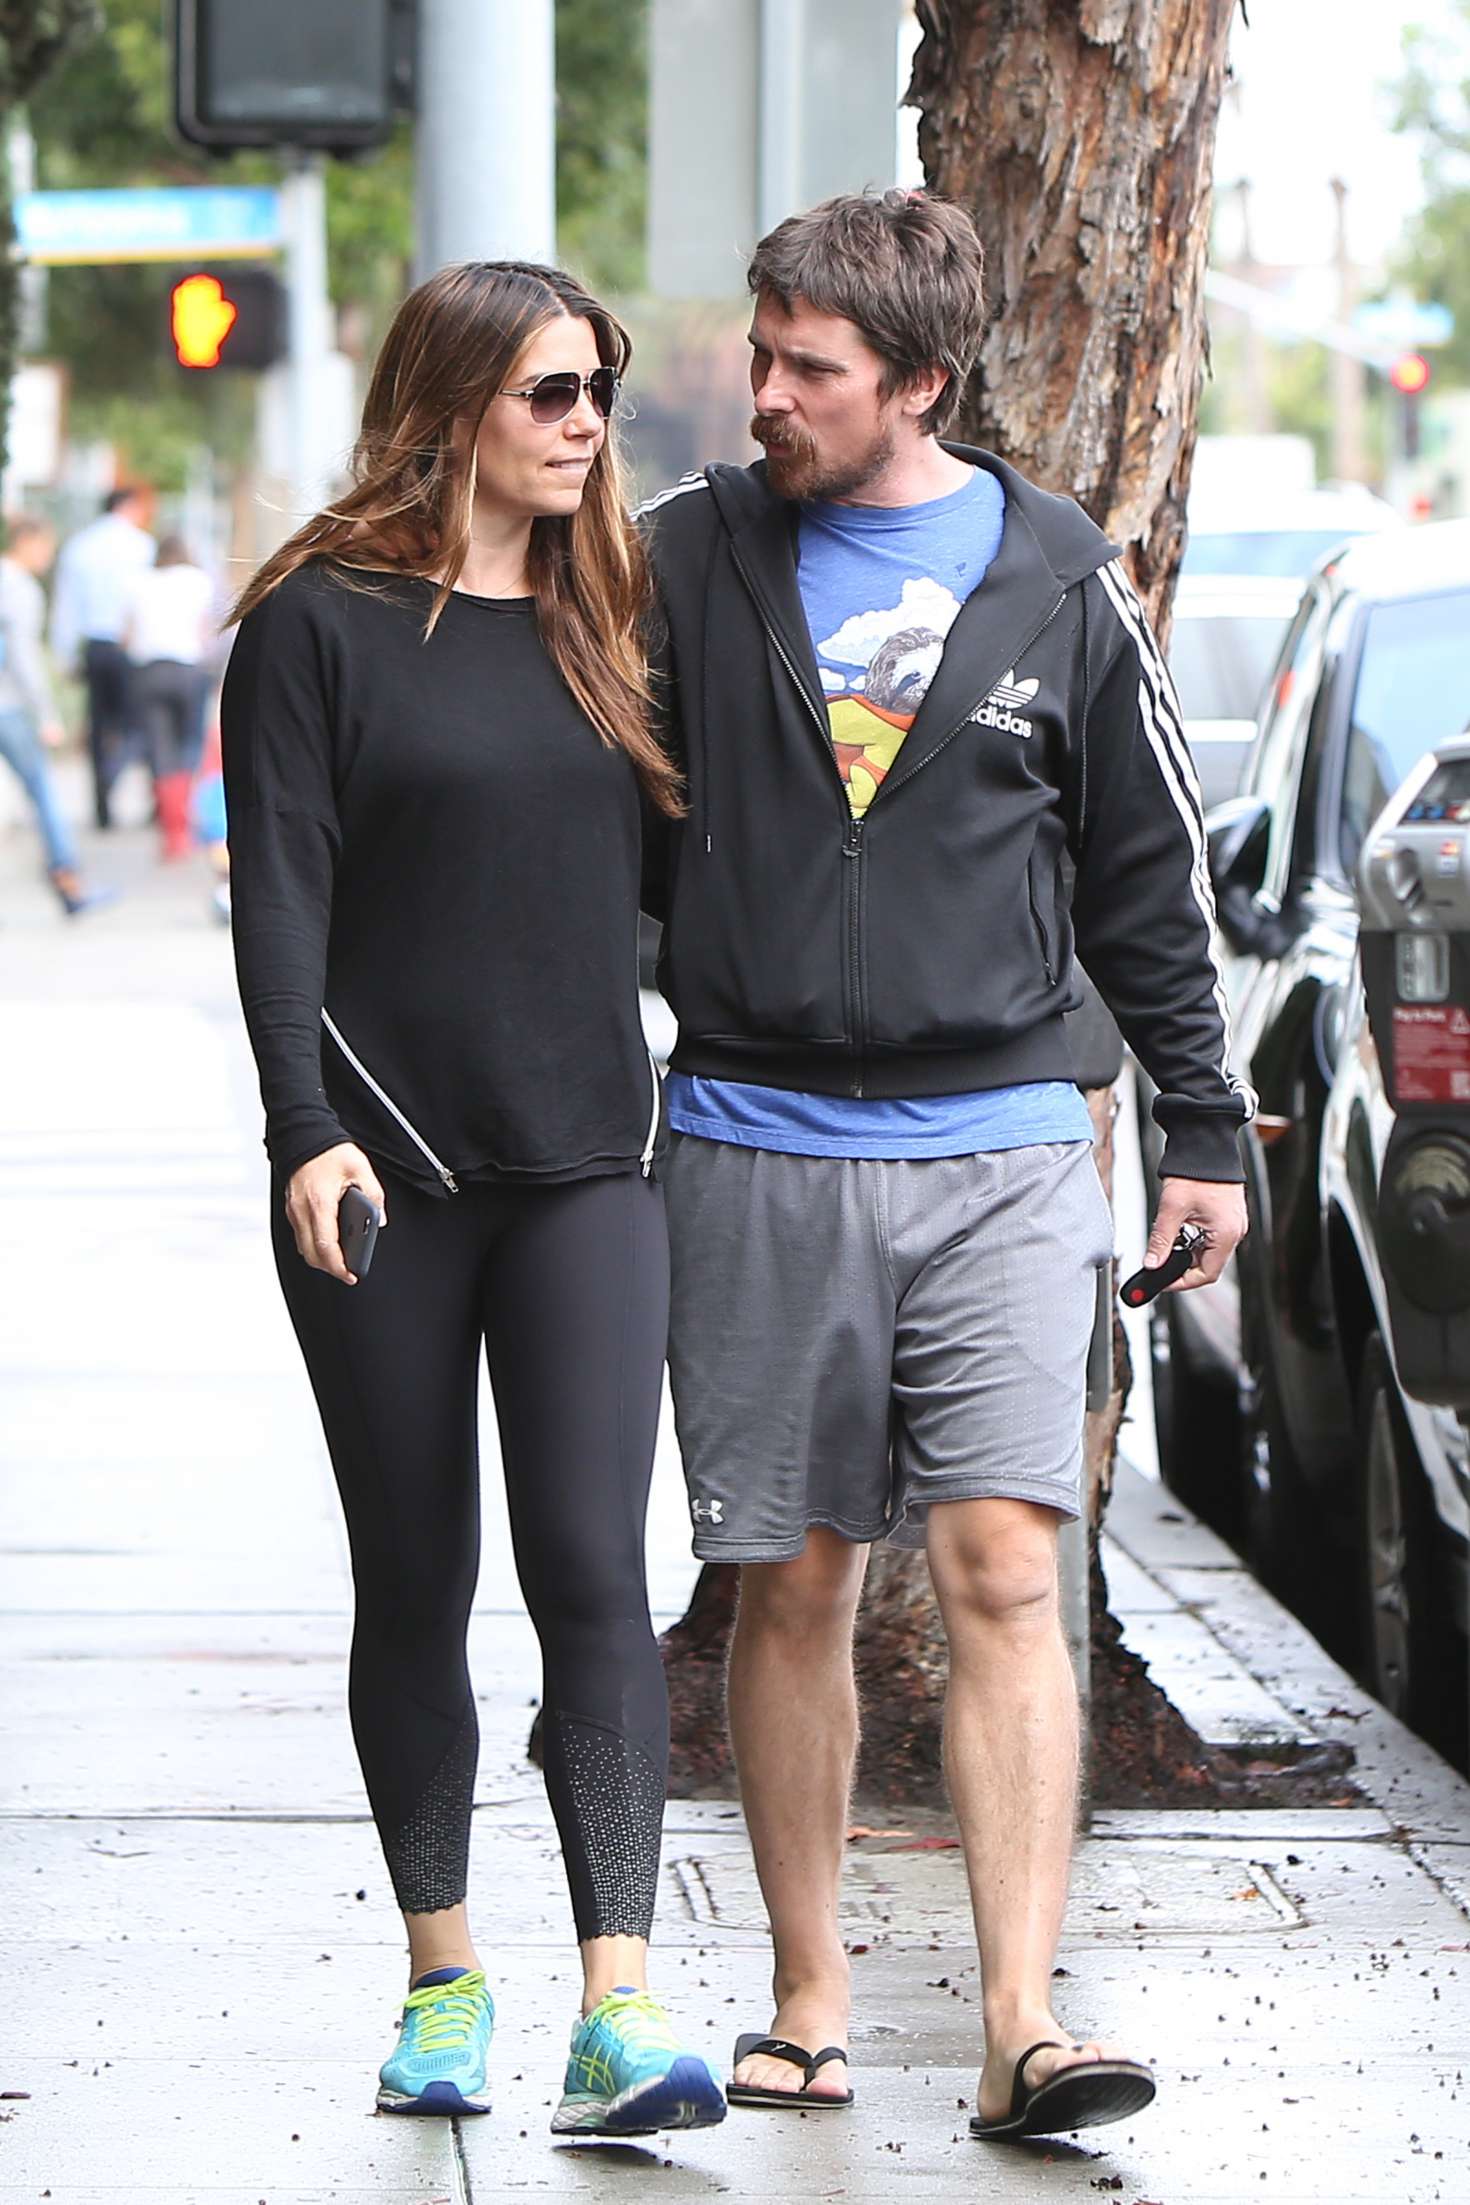 Sibi Blazic and Christian Bale out in Santa Monica -19 – GotCeleb